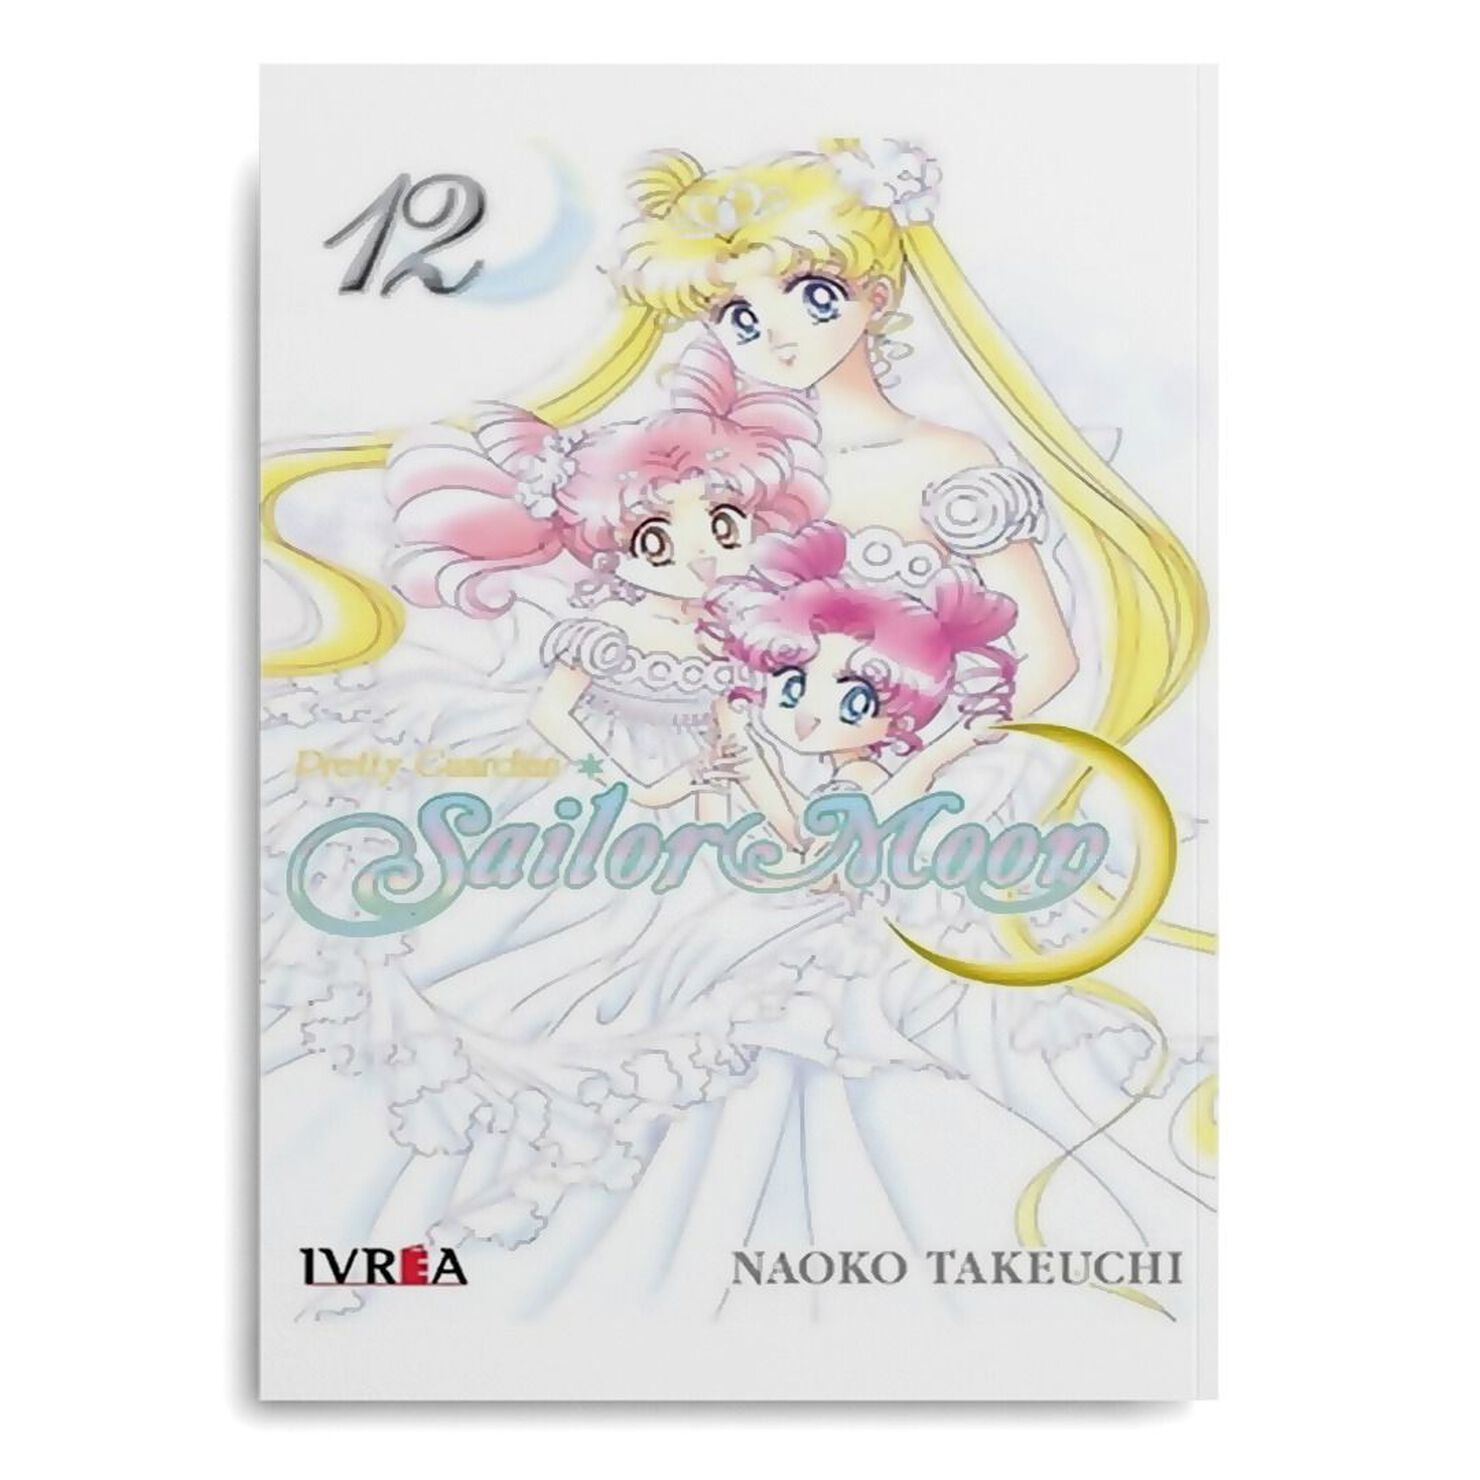 Manga Sailor Moon #12 